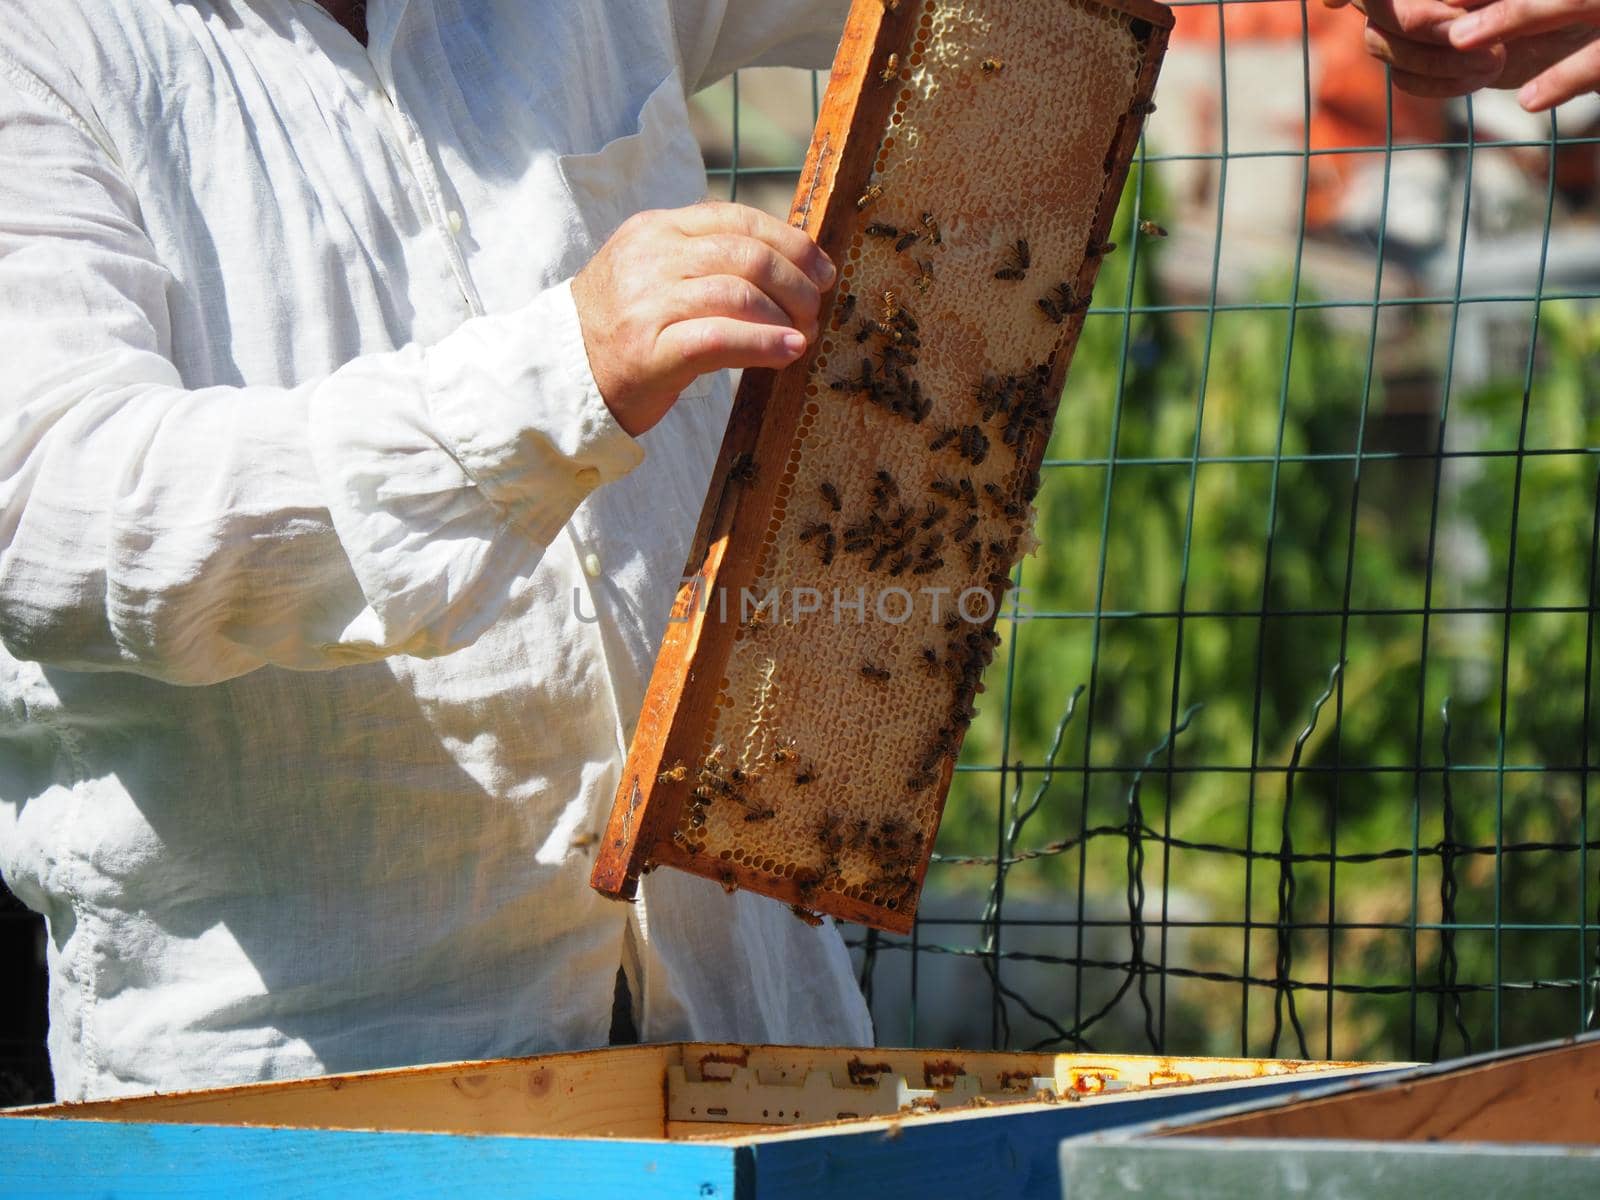 Beekeeper working with bees and beehives on the apiary. Beekeeping concept. Beekeeper harvesting honey Beekeeper on apiary.